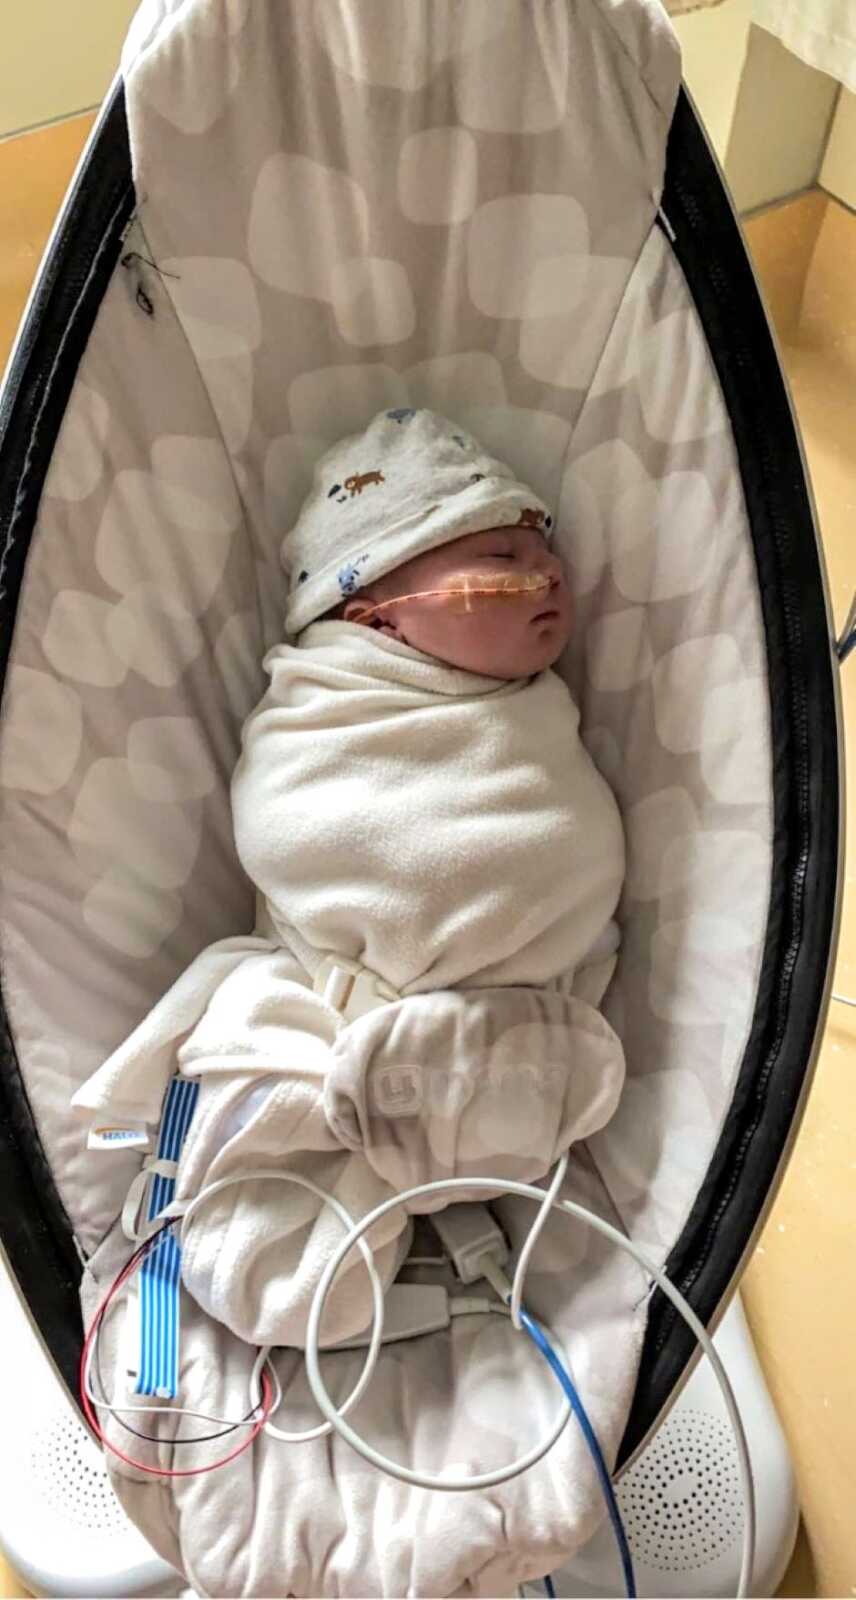 Newborn boy swaddled in a white blanket sleeps in a baby swing with a feeding tube